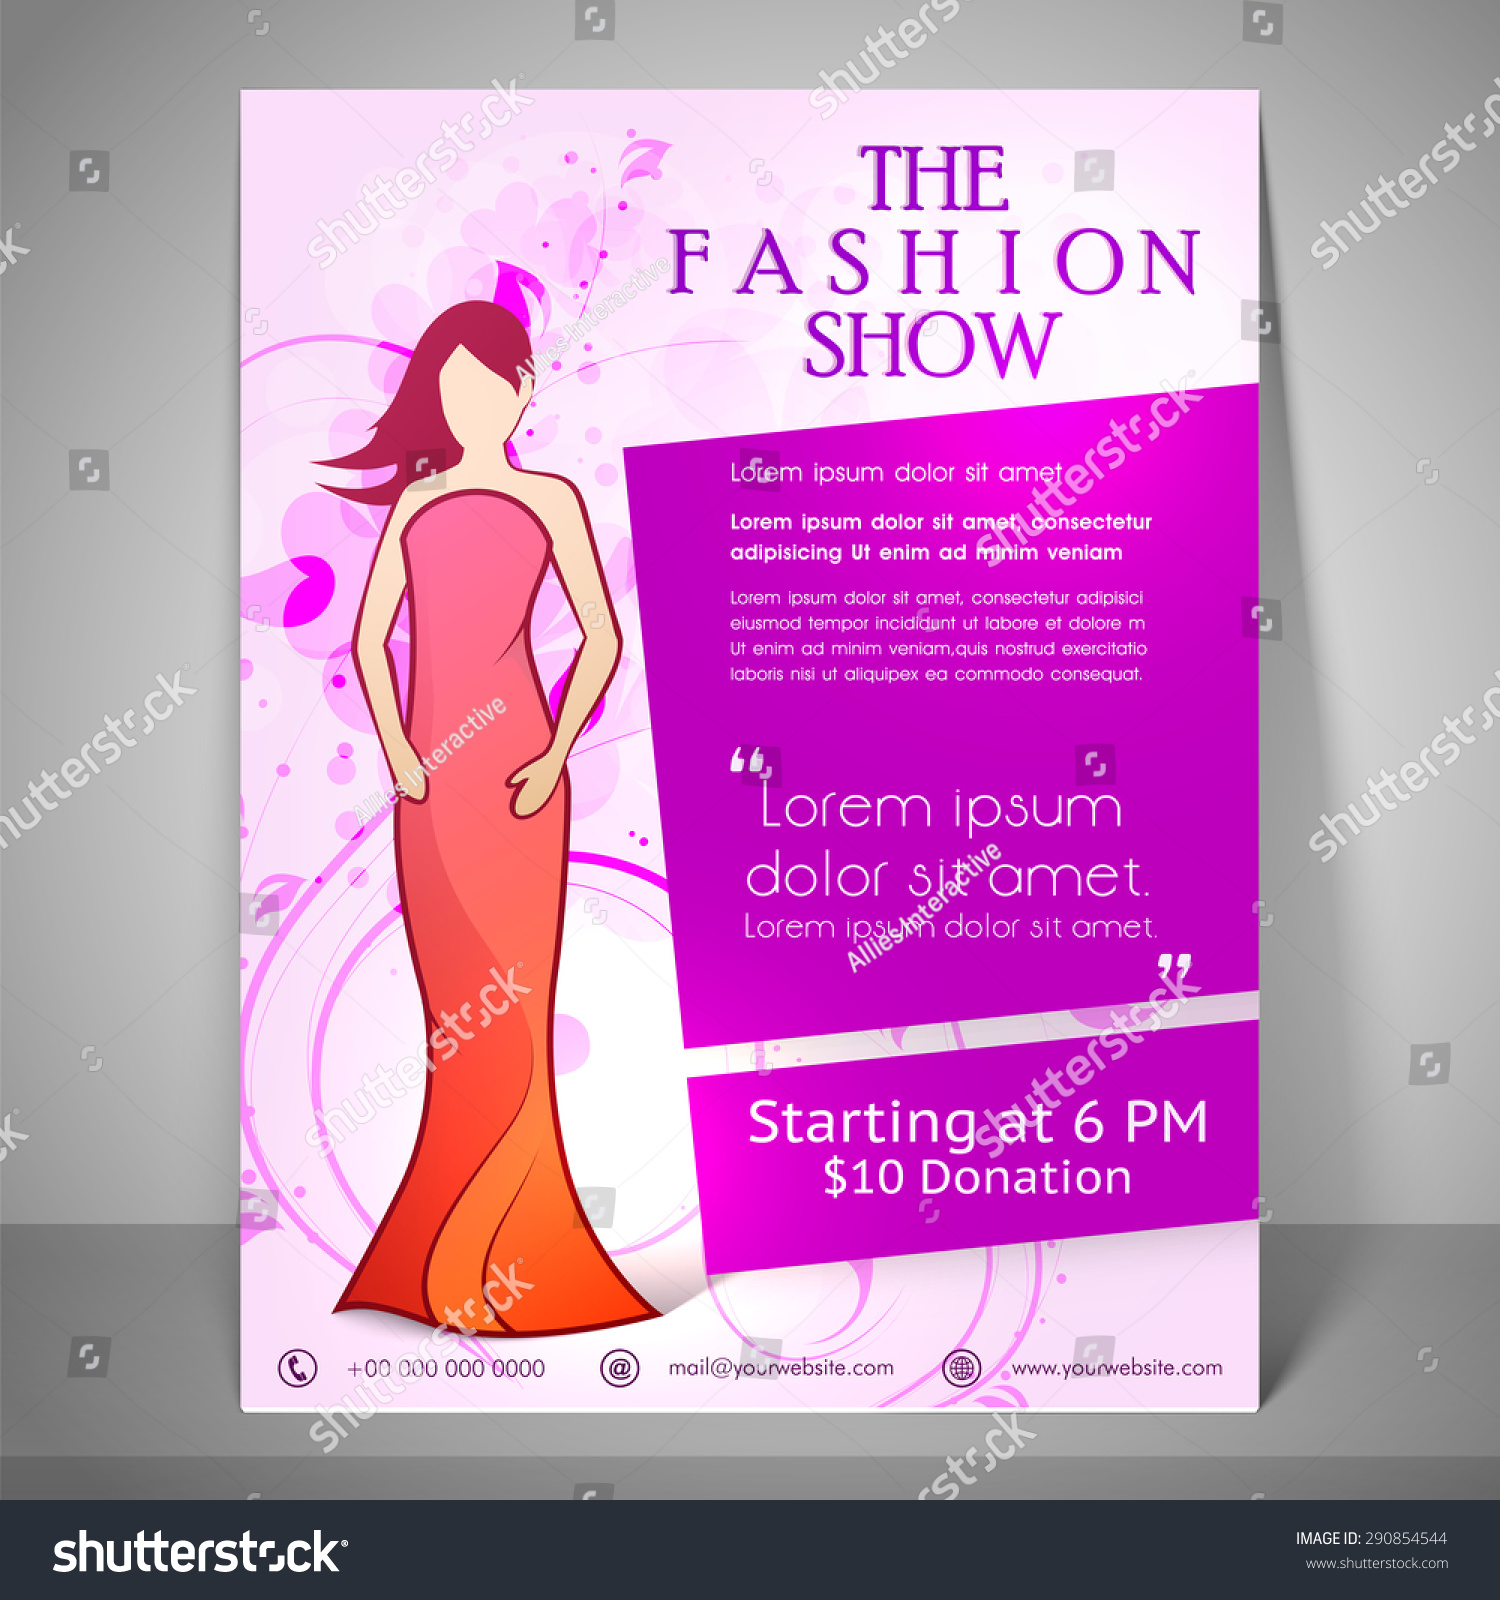 clip art fashion show invitation - photo #28